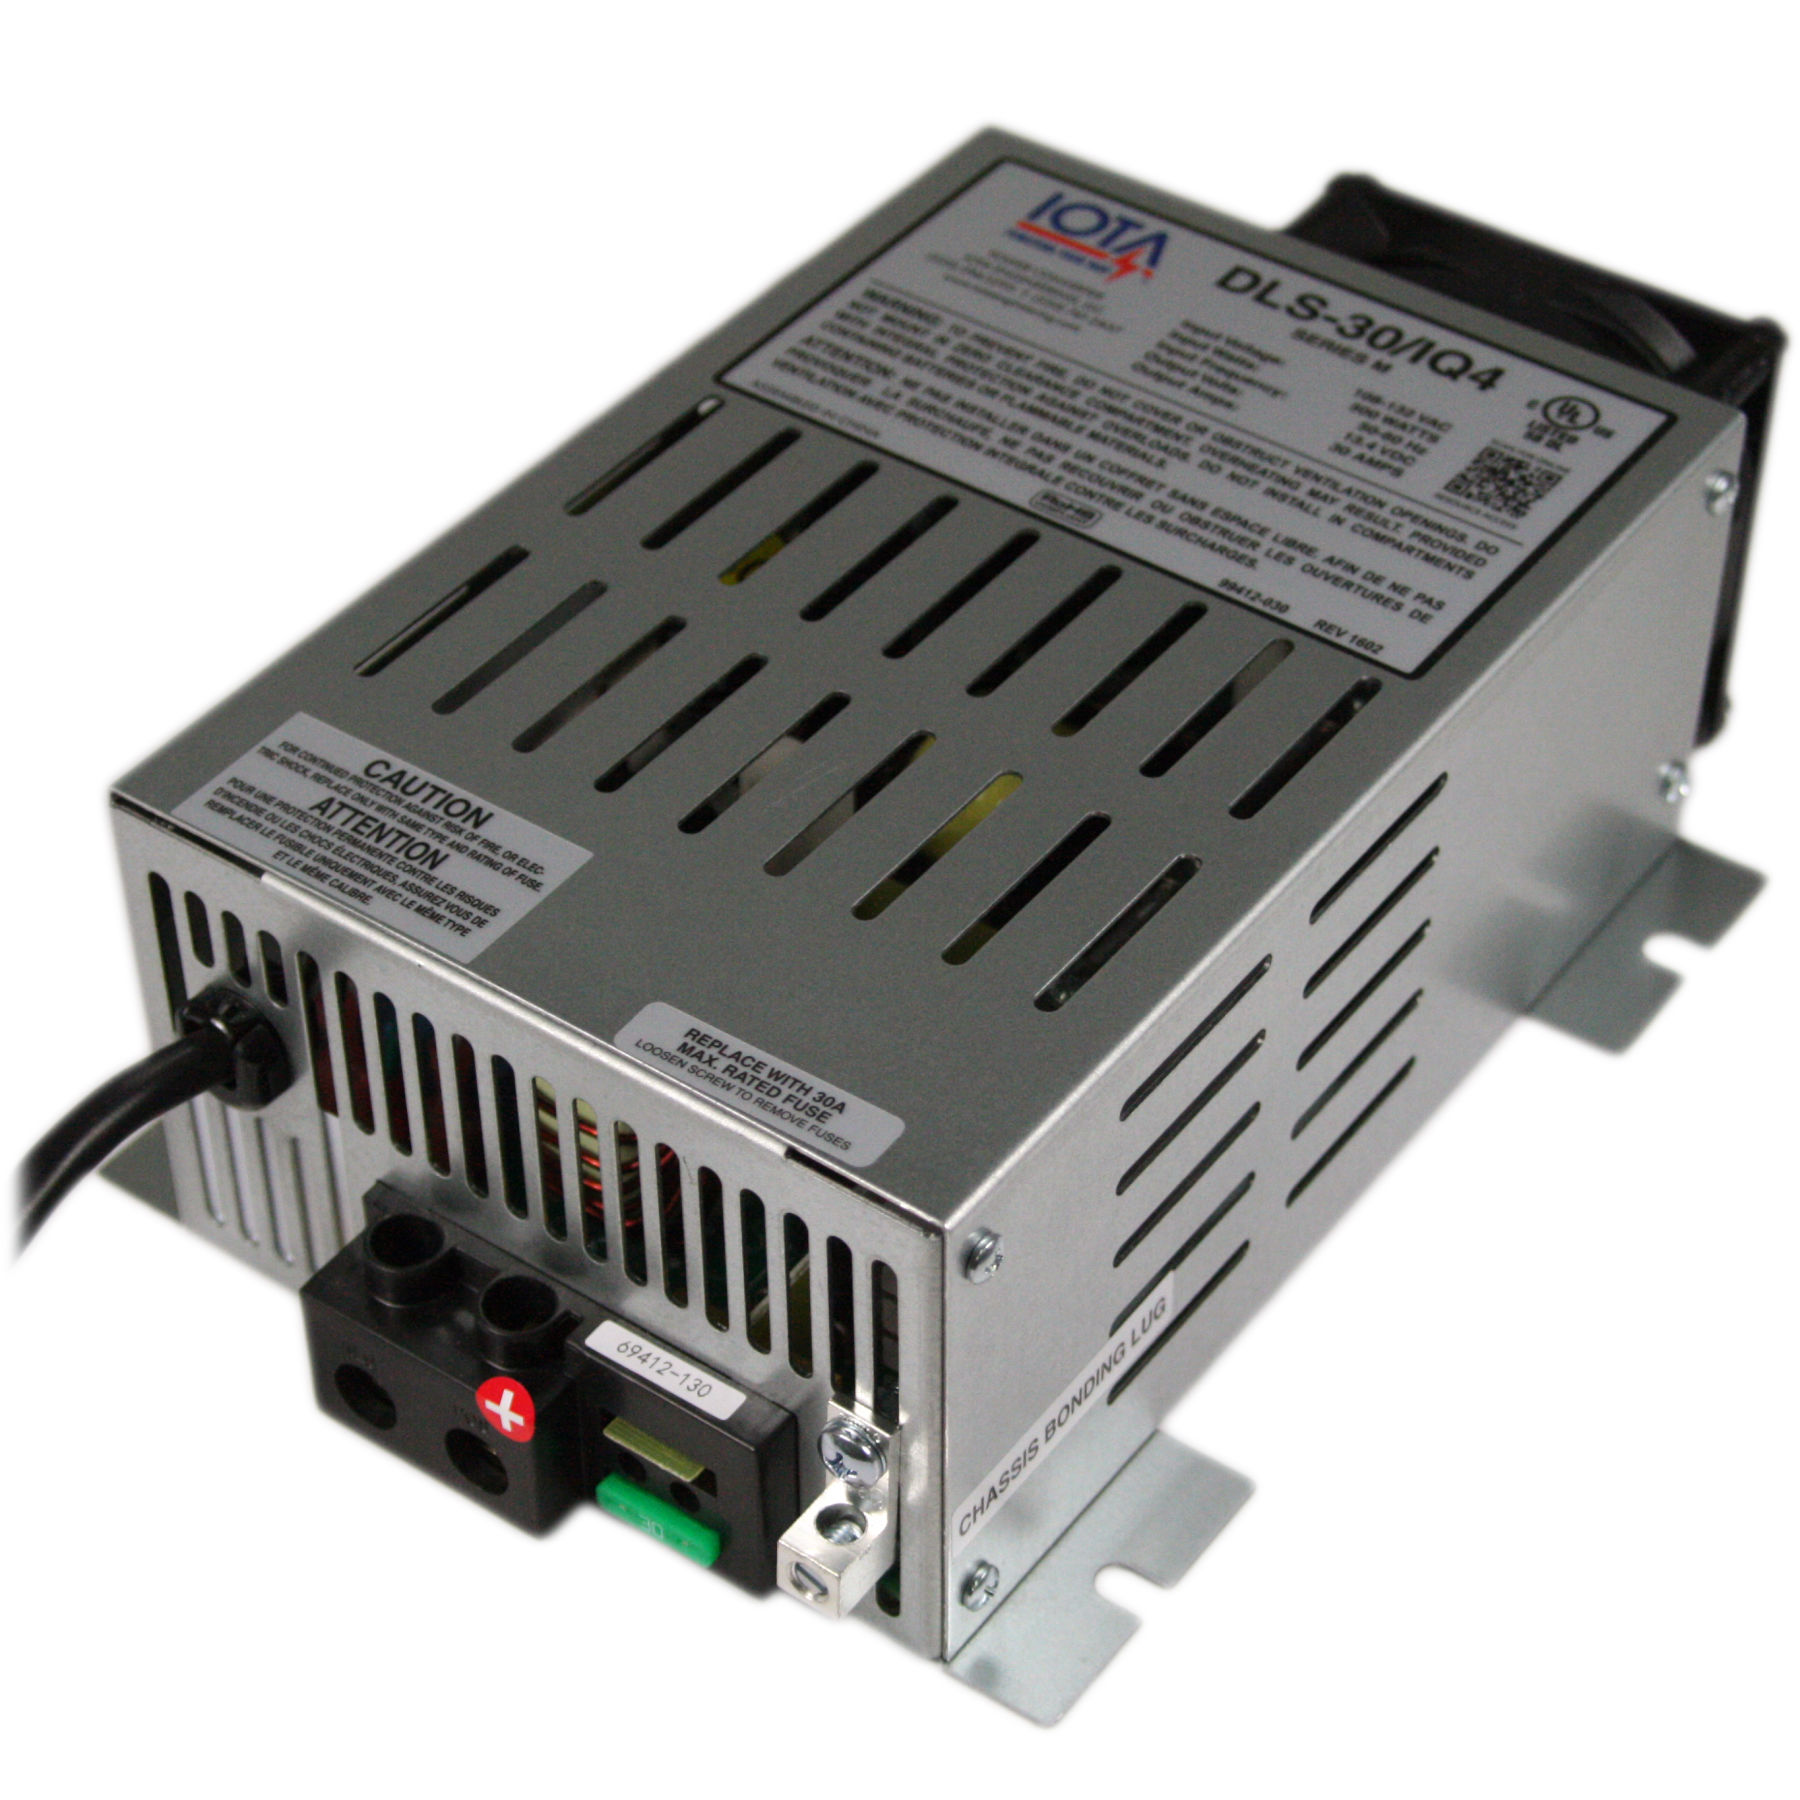 IOTA DLS-30/IQ4 | 12v 30 Amp Charger Converter Power Supply w/Integrated IQ4 Sensor